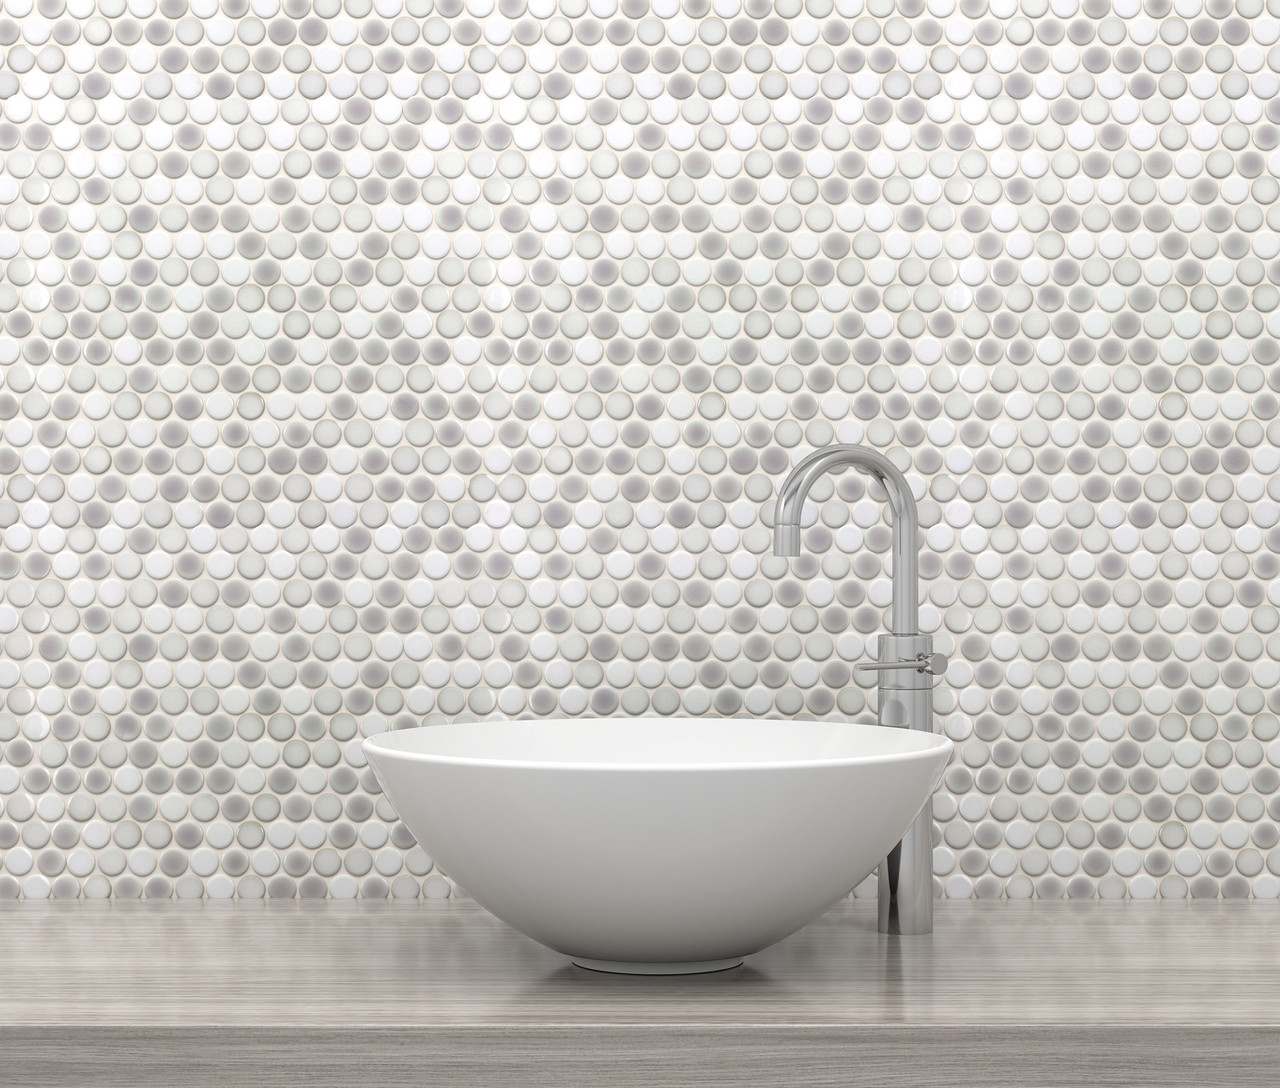 Penny Tile Stencils - Hexagon Shape Tiles Floor Stencils for Bathroom